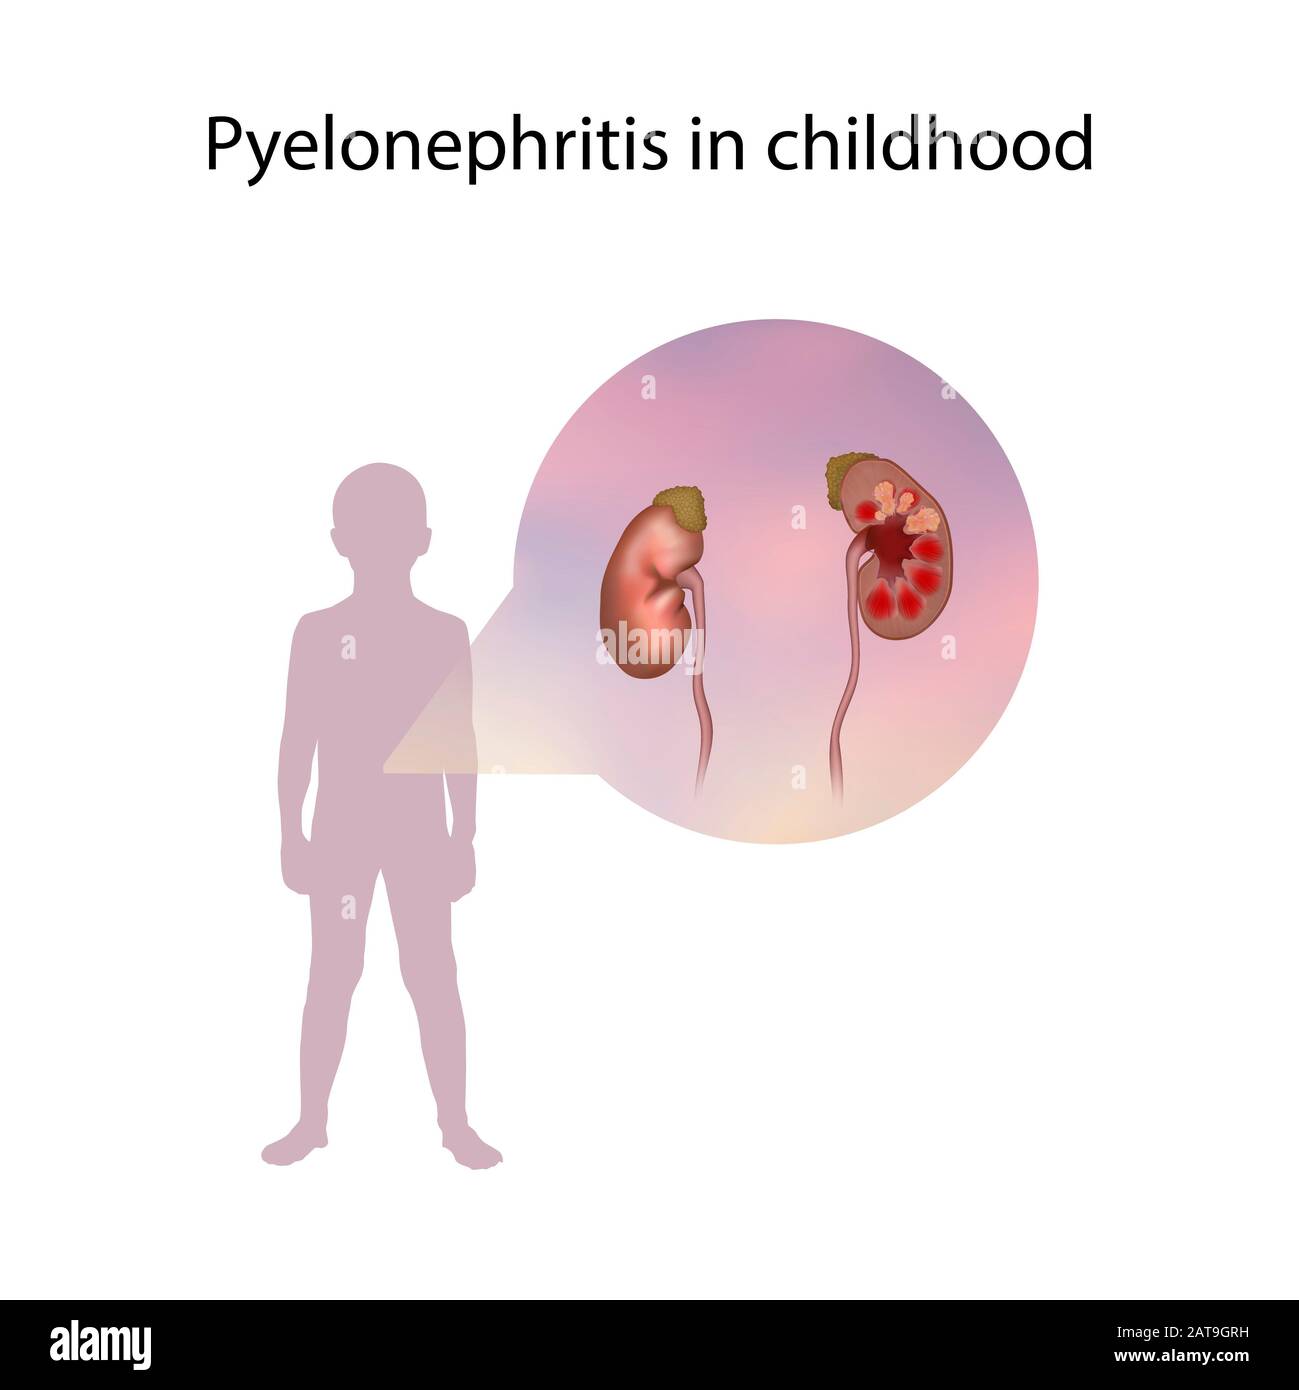 Pyelonephritis in childhood, illustration Stock Photo